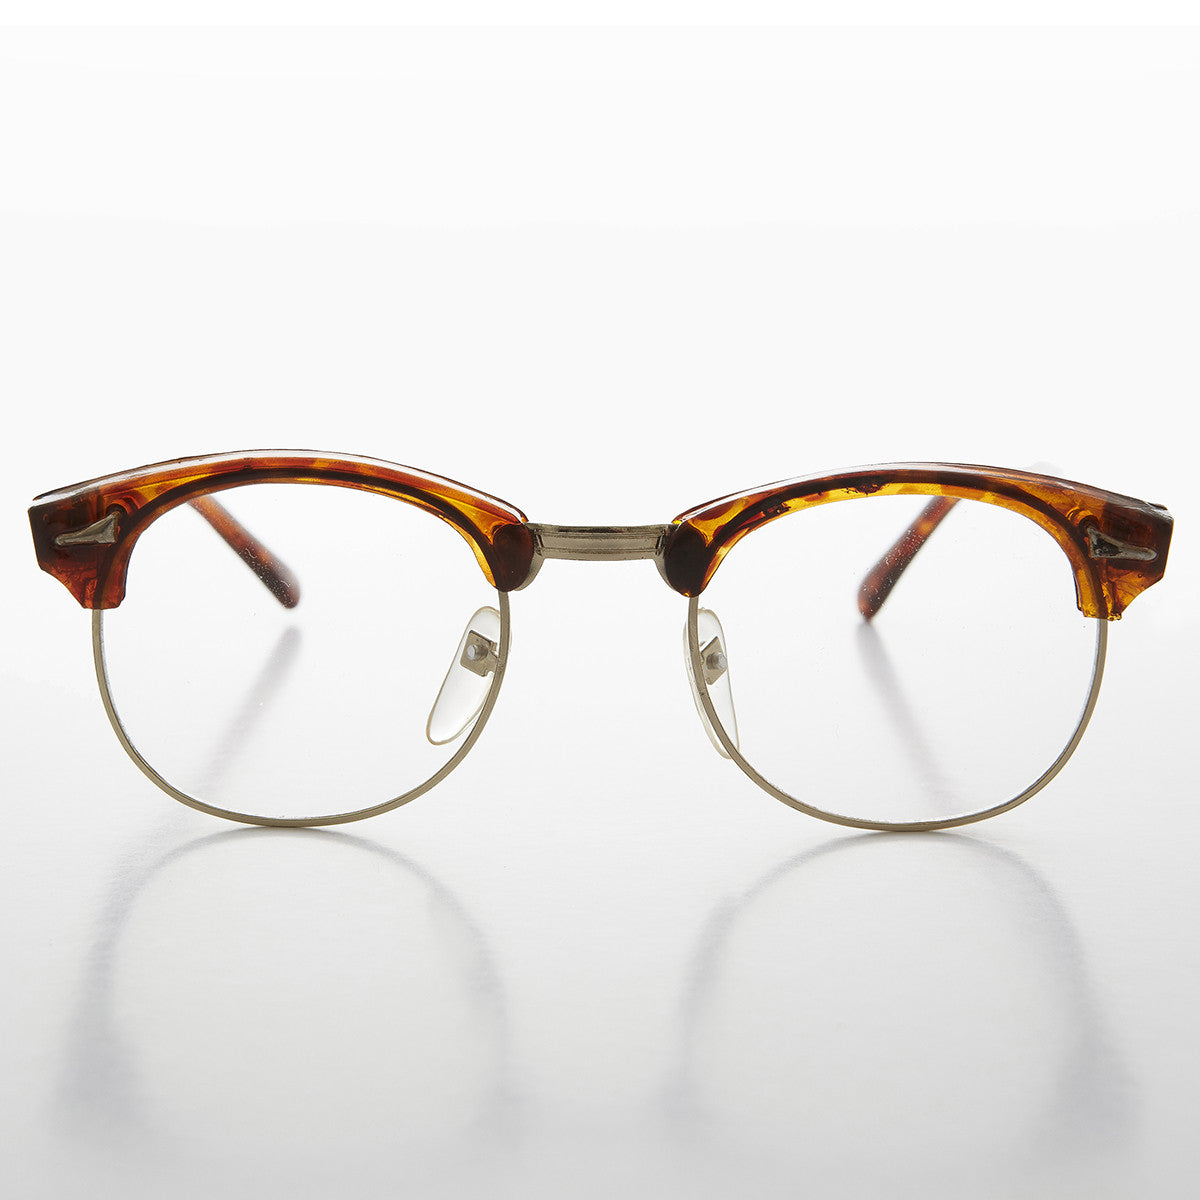 Sunglass Museum 60s Retro Horn Rim Hipster Vintage Glasses - Malcolm - Black